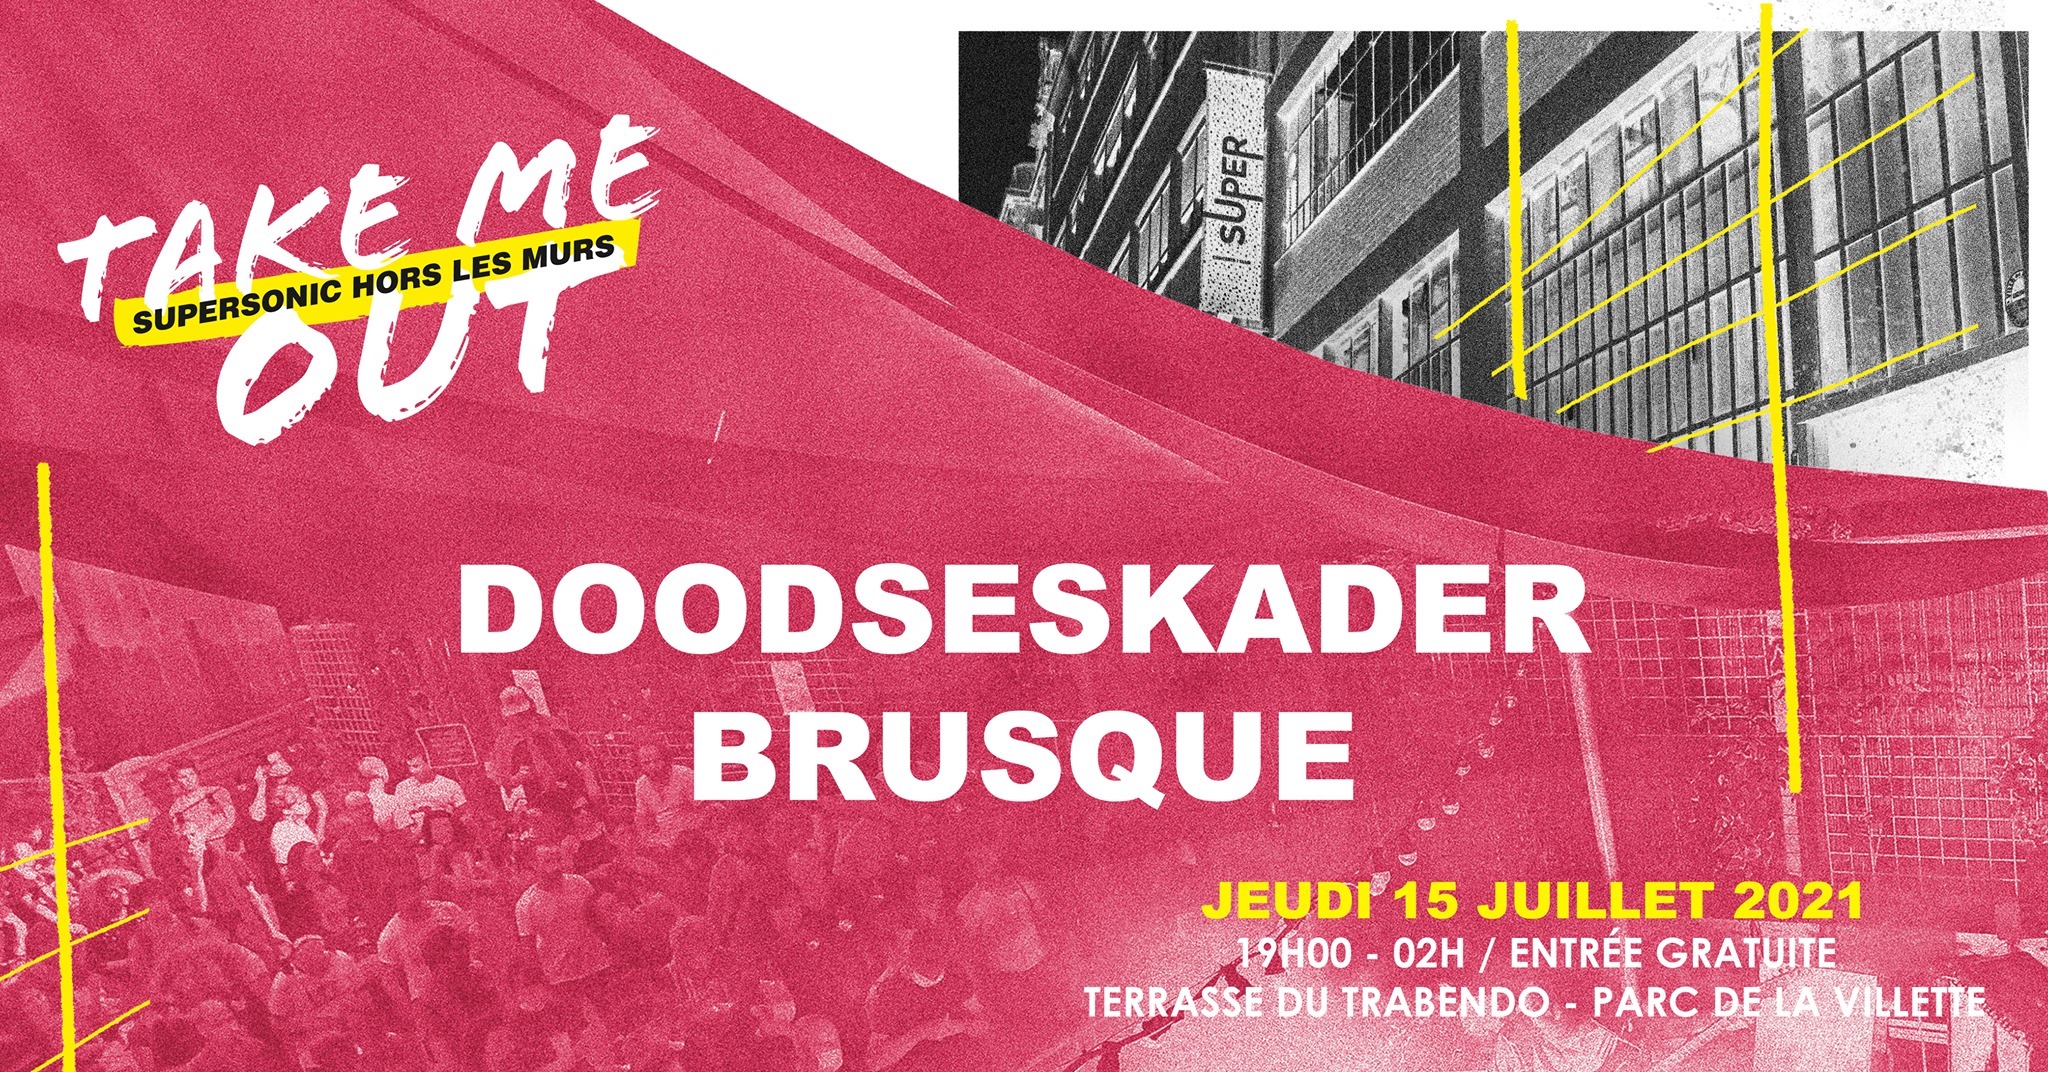 Take me Out (Supersonic) : Doodsekader + Brusque @ Terrasse du Trabendo (Paris) le 15 Juillet 2021  